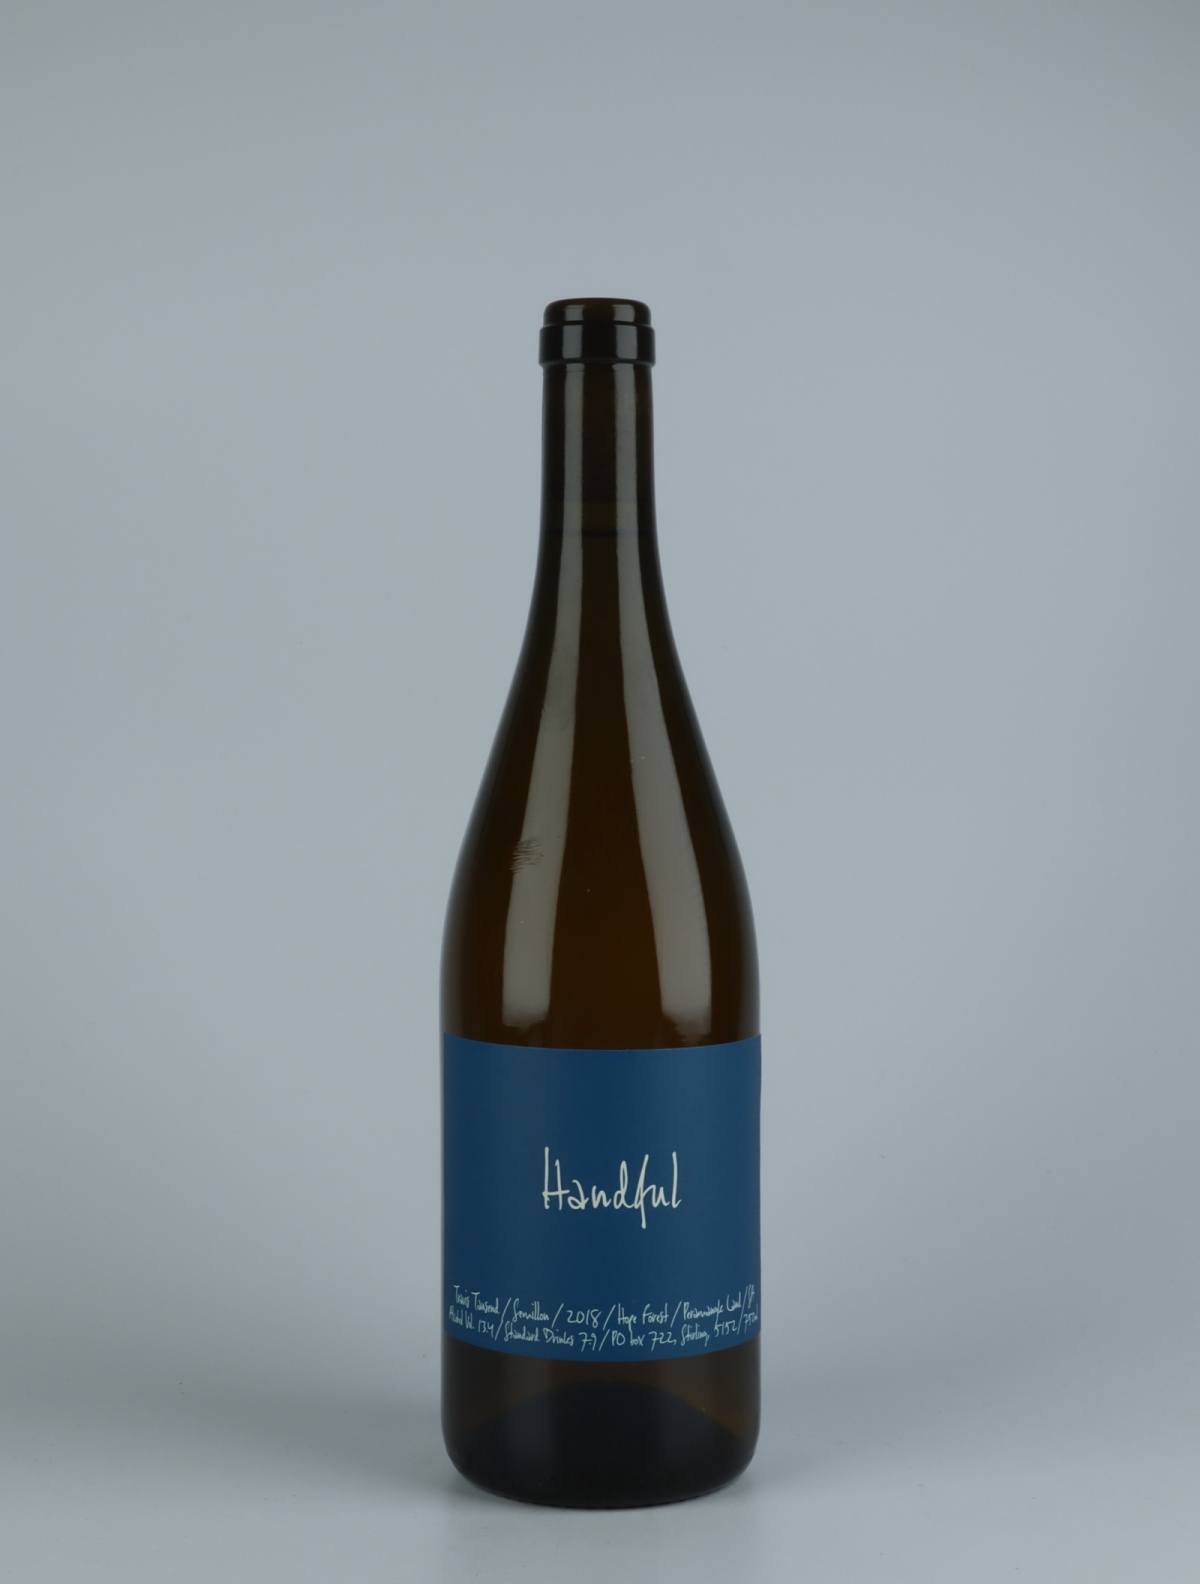 A bottle 2018 Handful Semillon Orange wine from Travis Tausend, Adelaide Hills in Australia